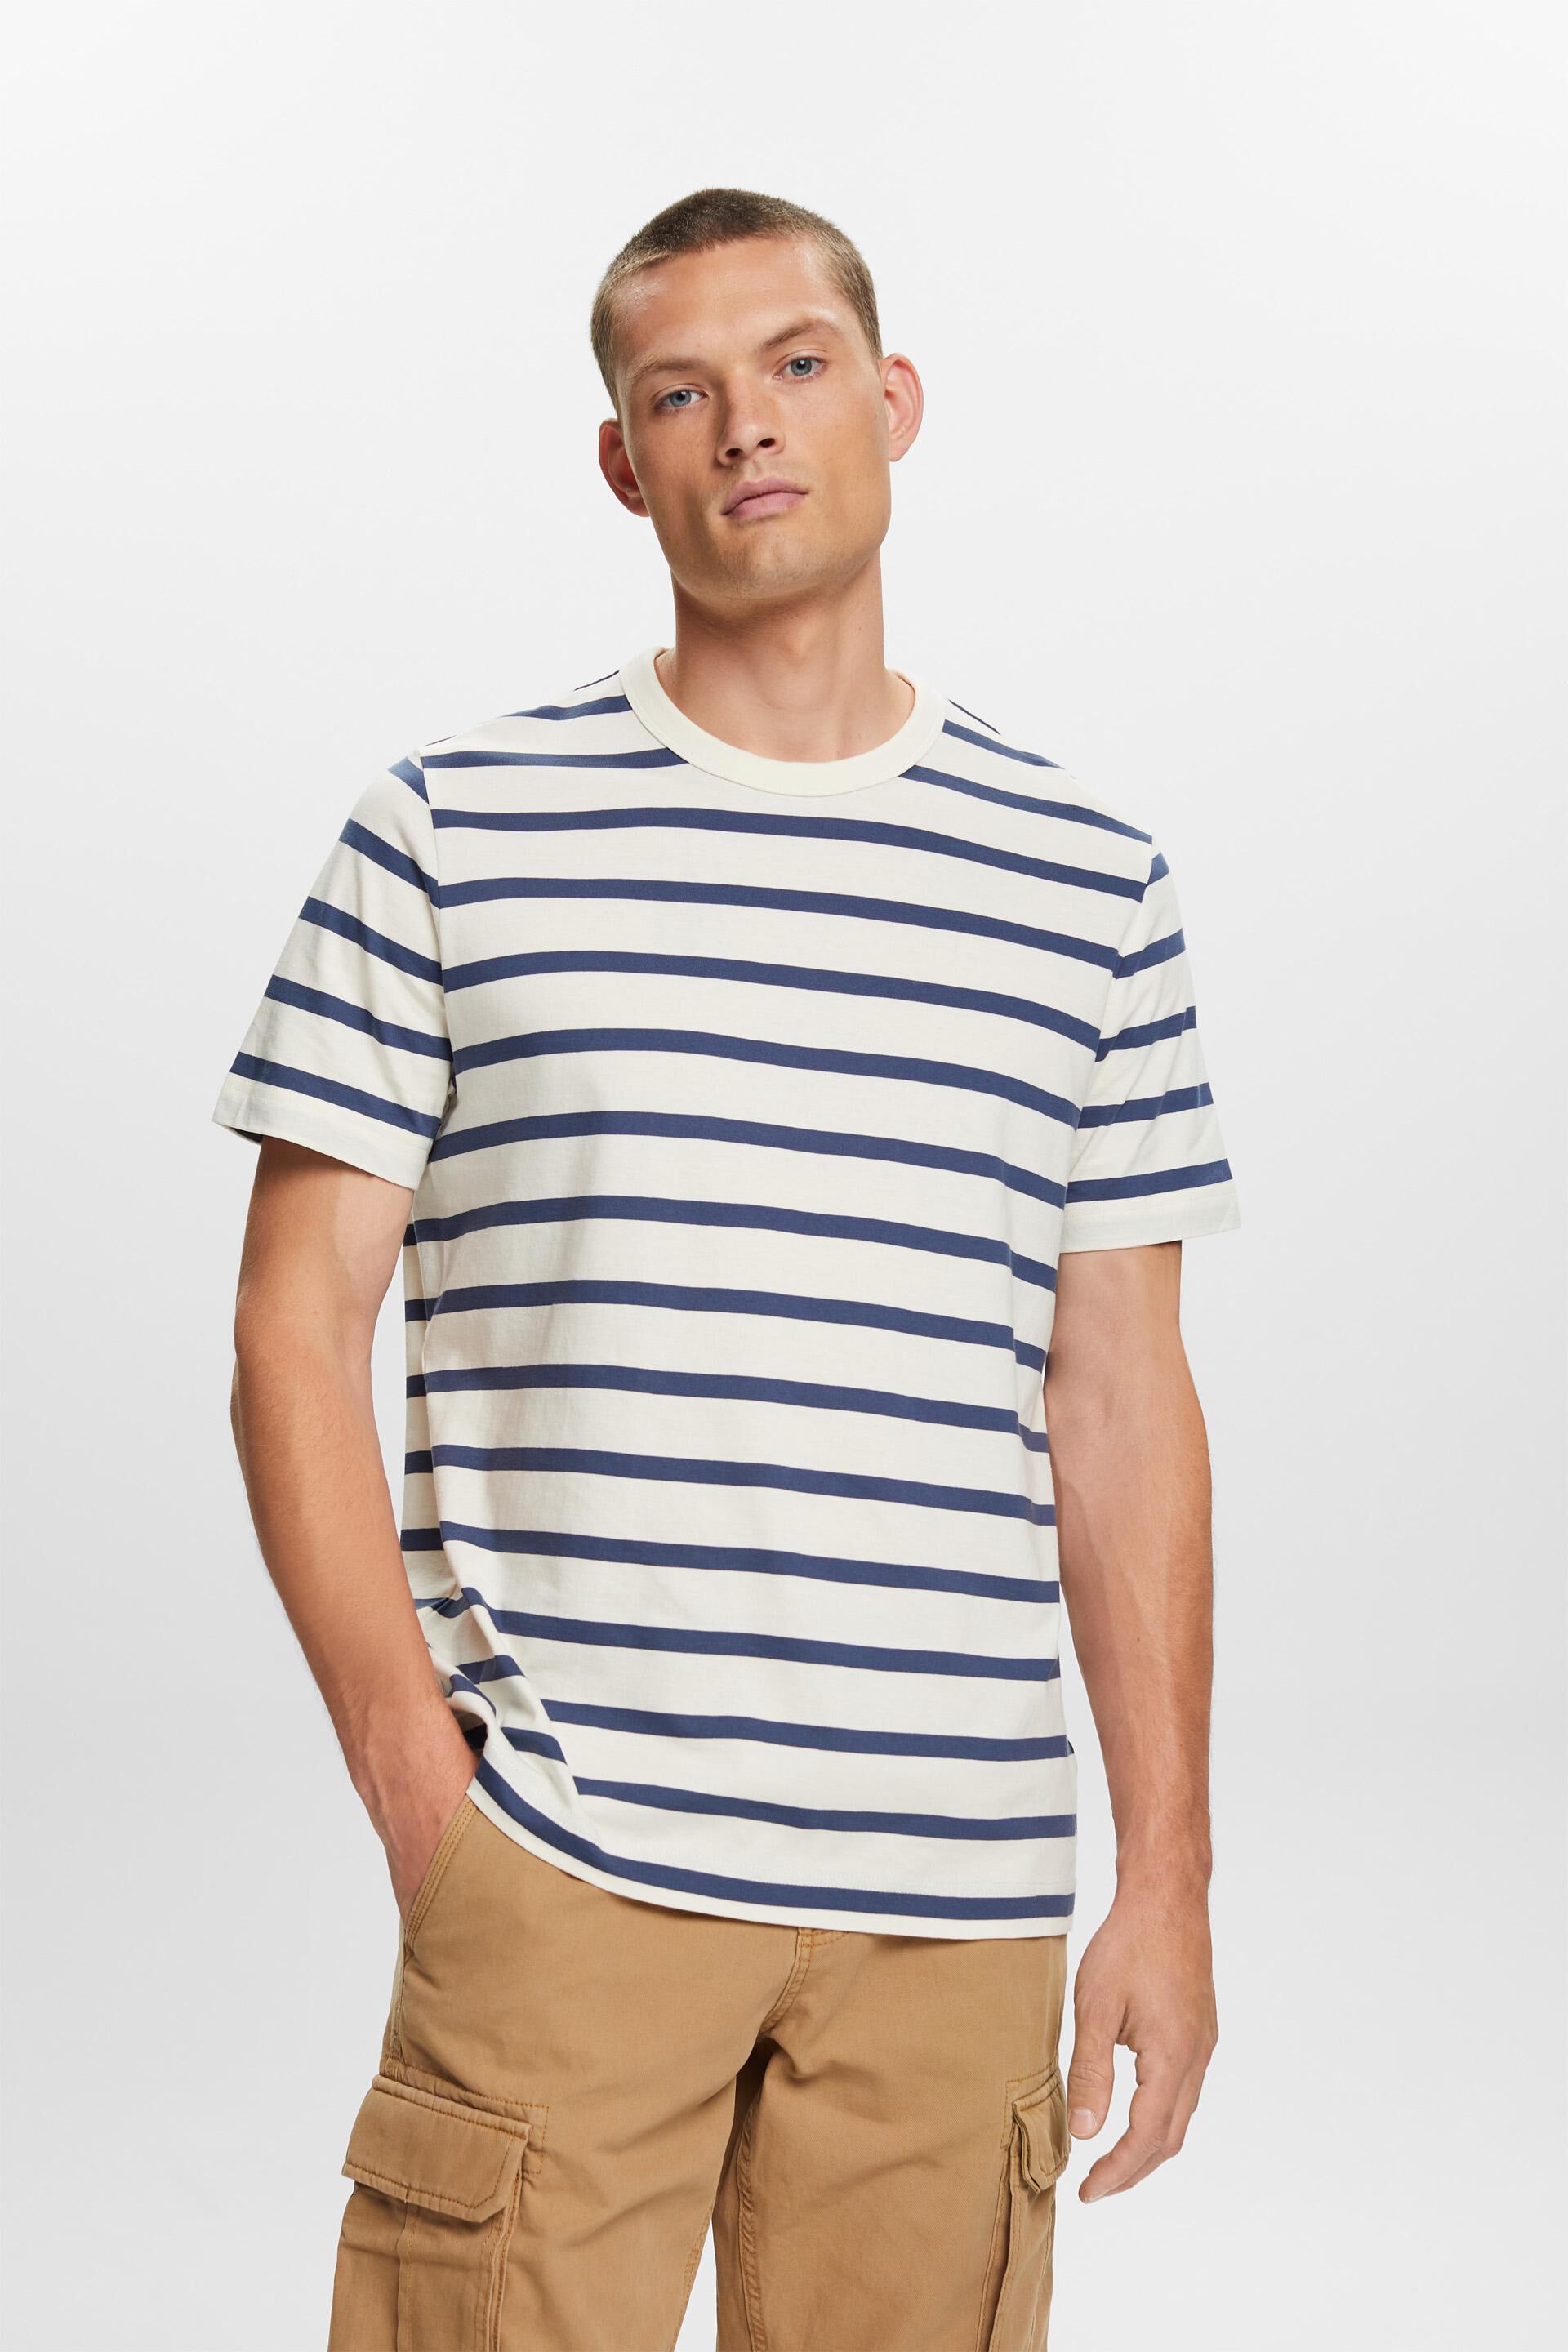 Esprit jersey t-shirt, Striped 100% cotton